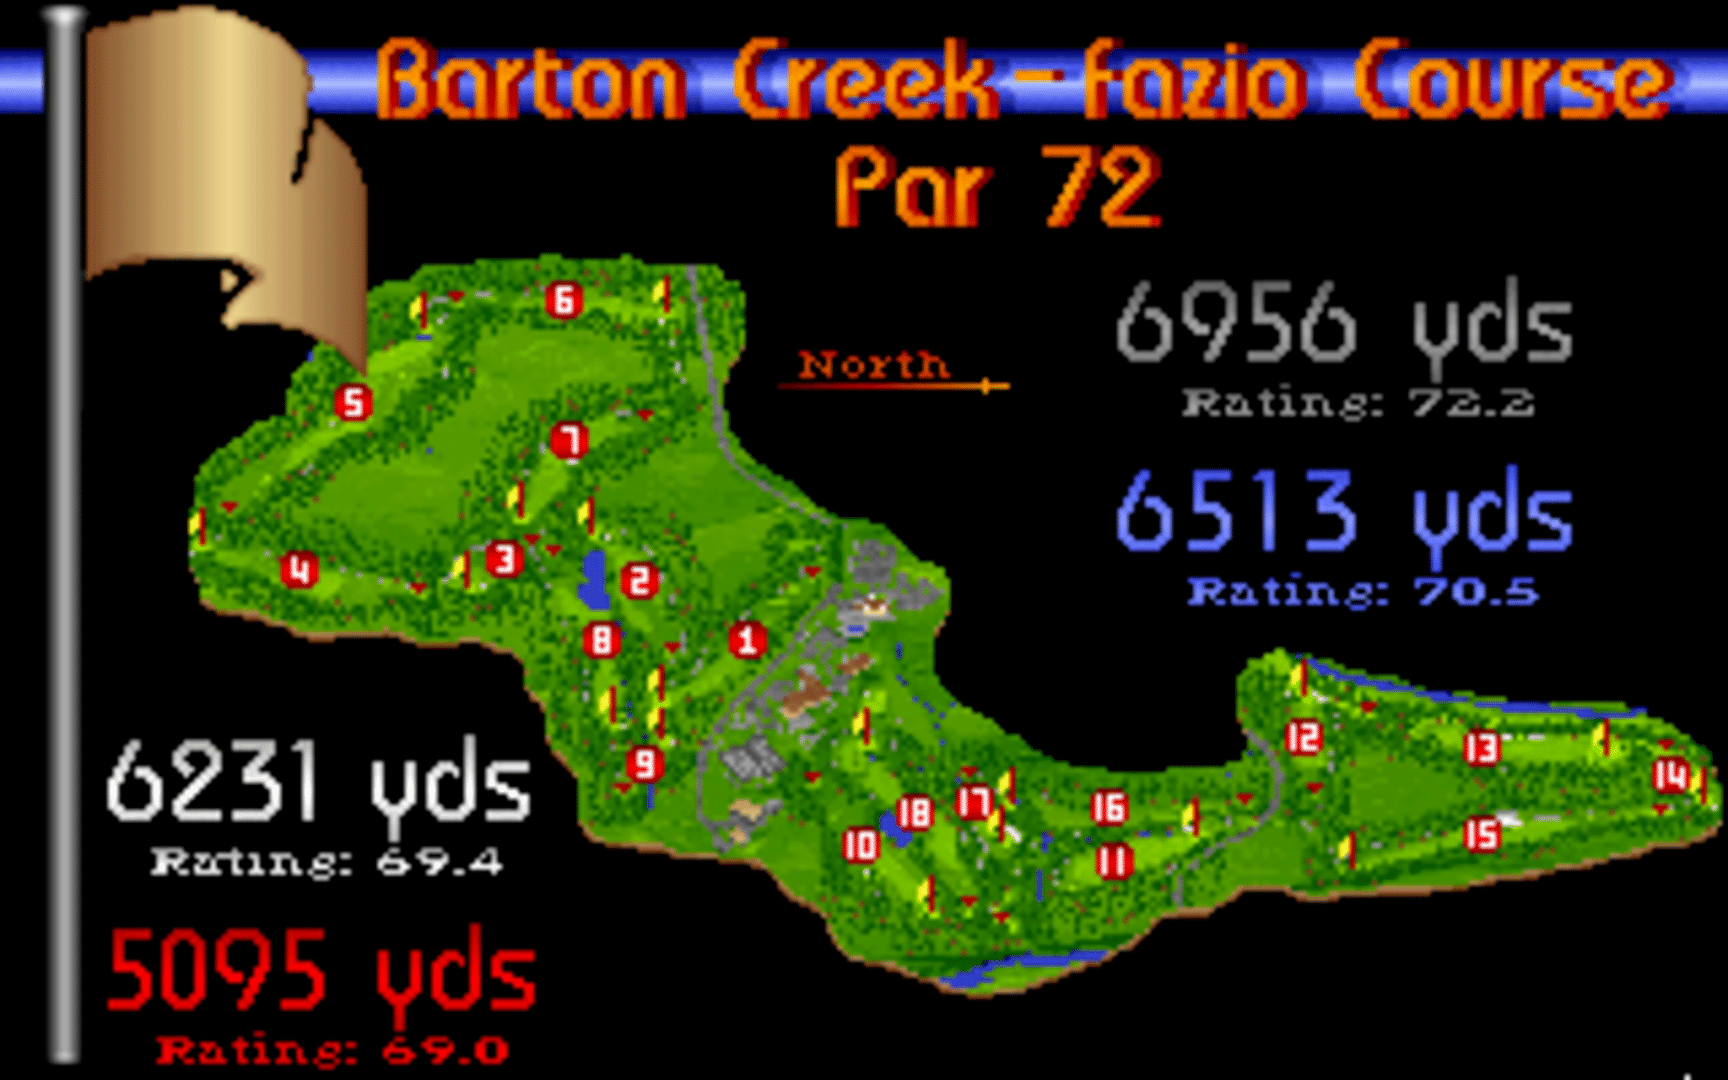 Links: Championship Course - Barton Creek screenshot